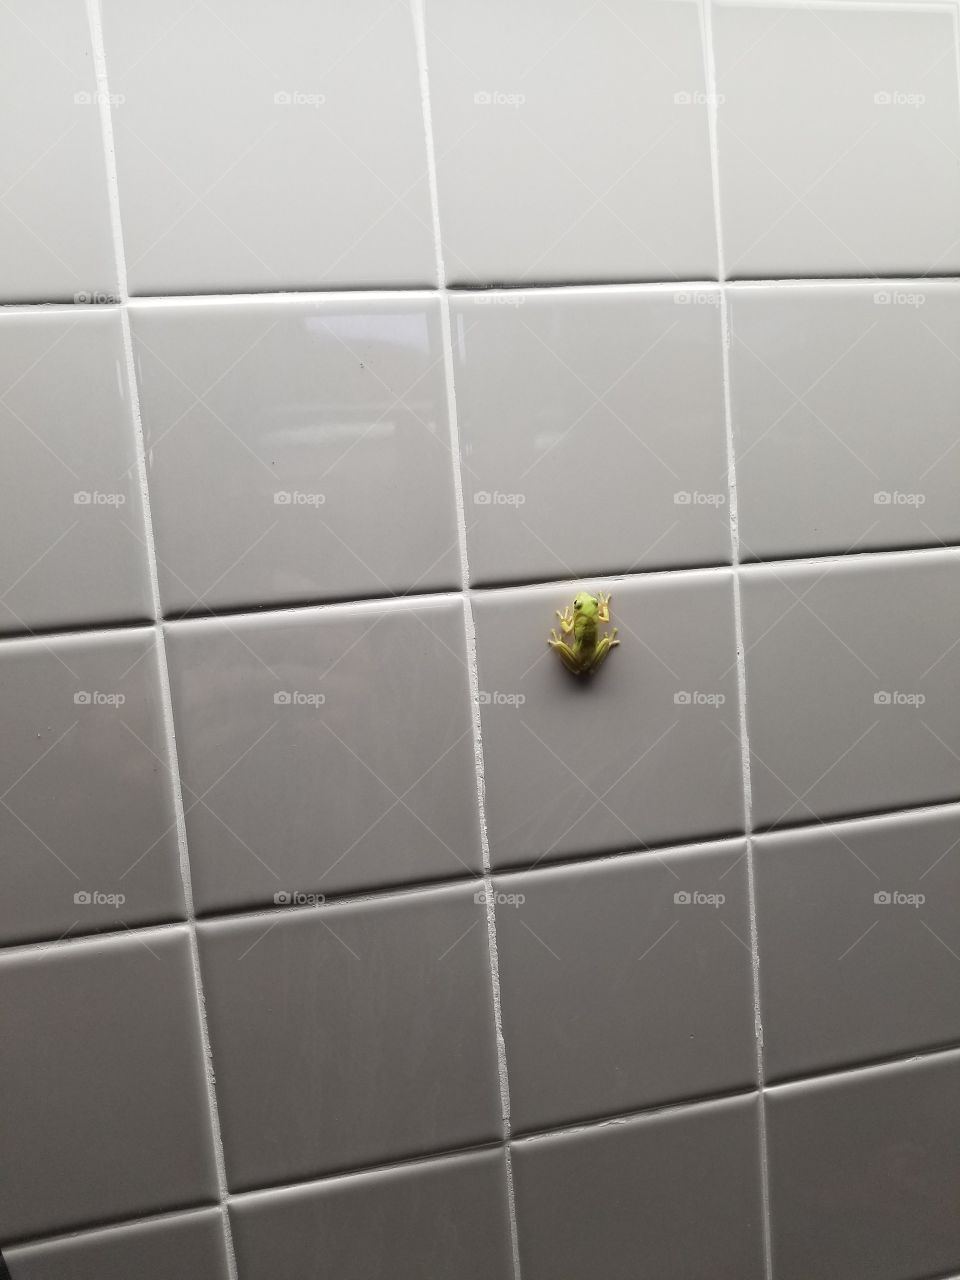 frog on tile wall